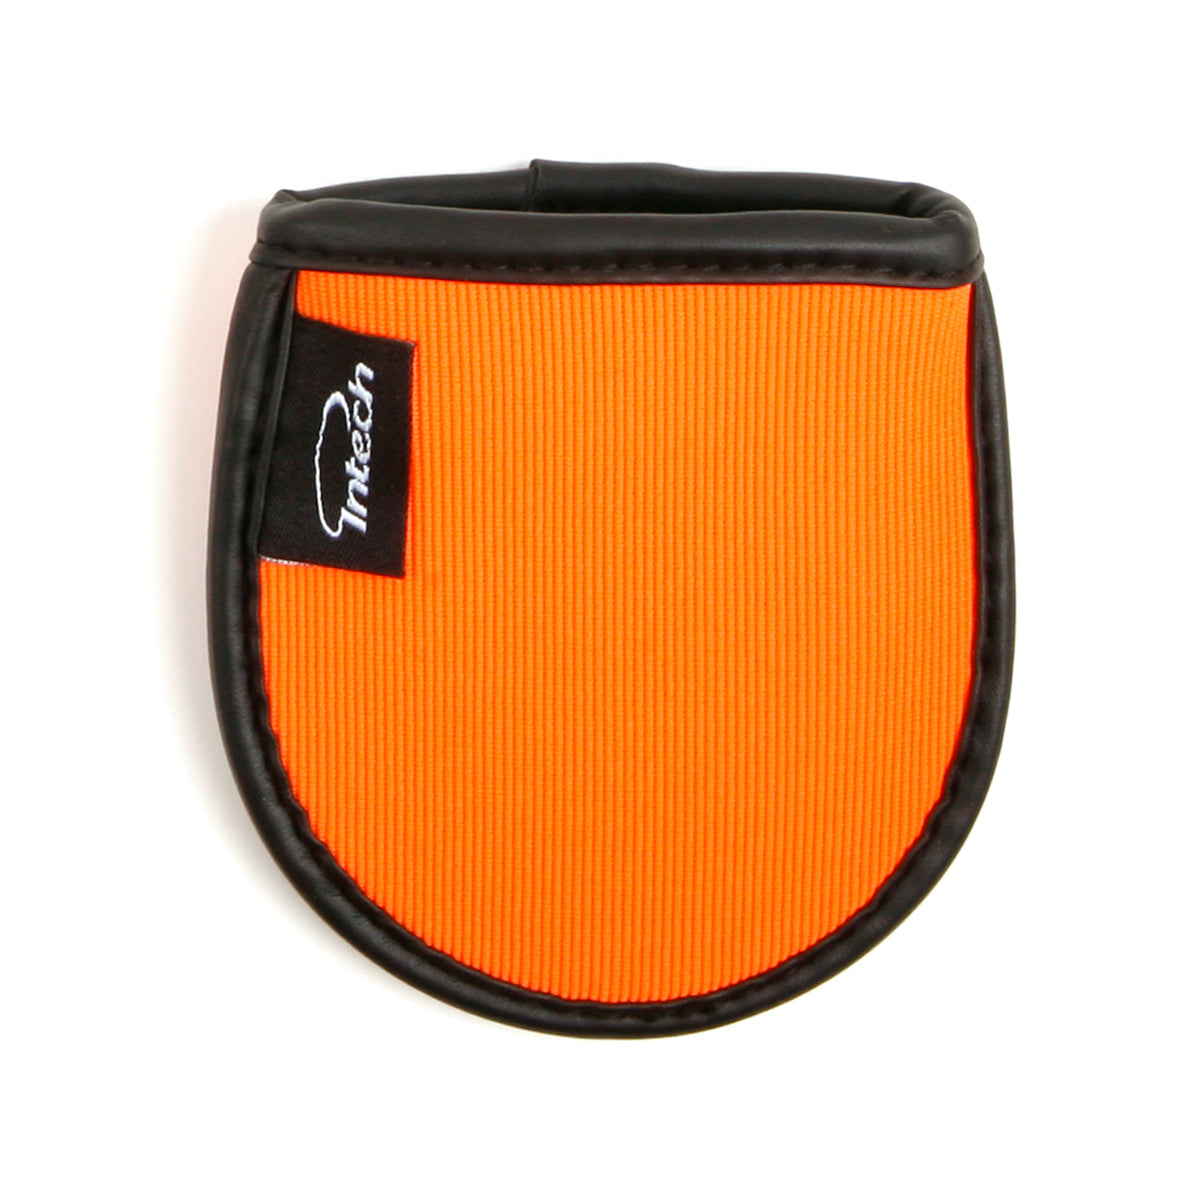 orange Intech Squeaky Clean Pocket Golf Ball Washer